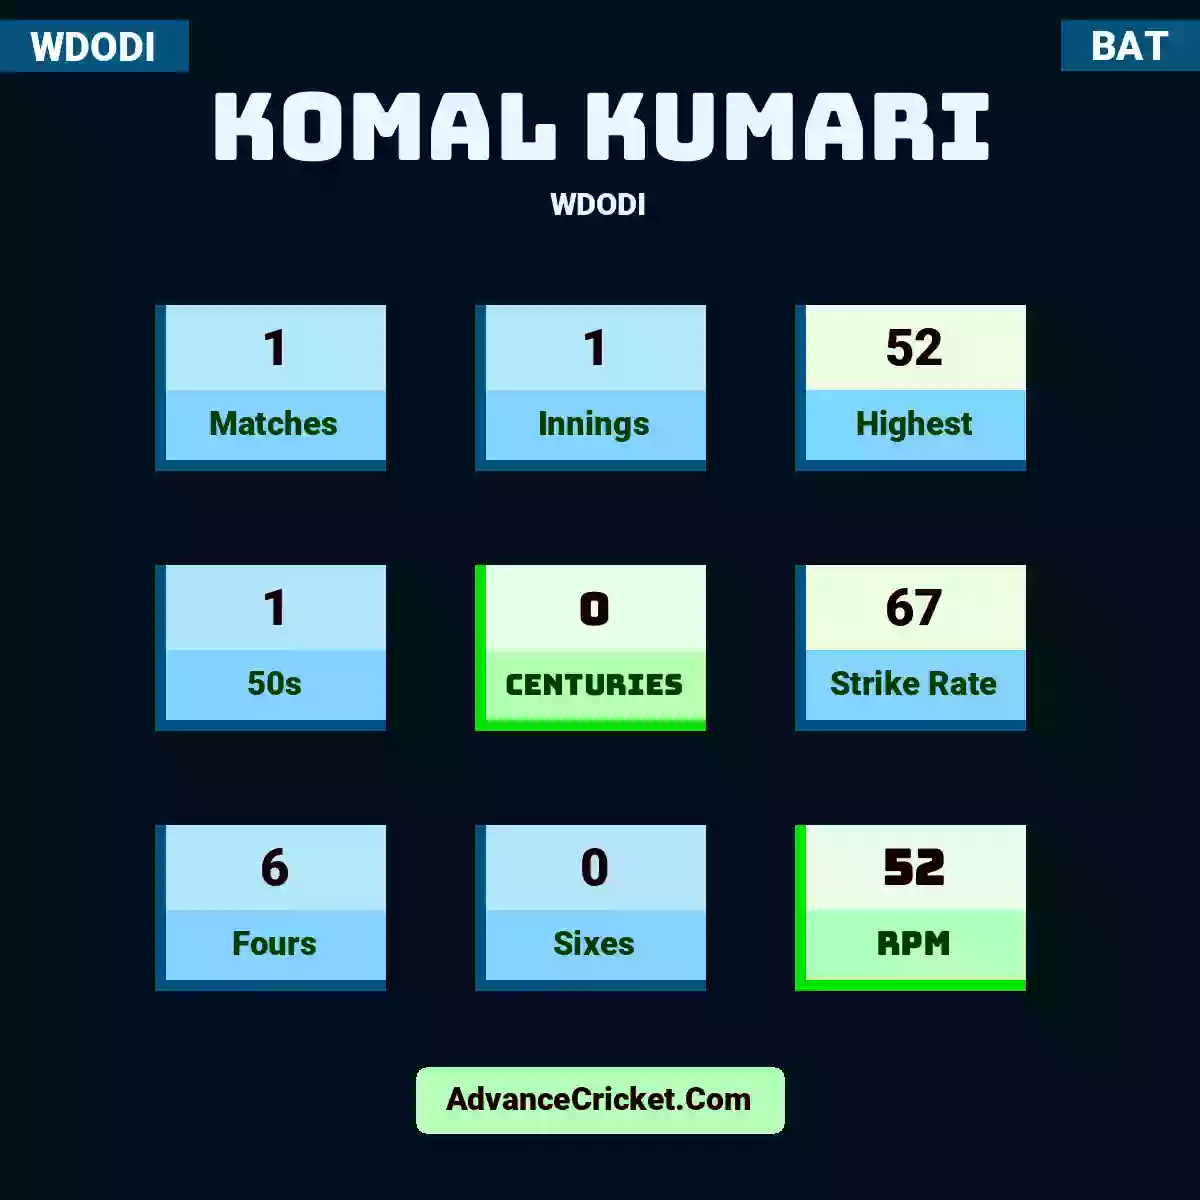 Komal Kumari WDODI , Komal Kumari played 1 matches, scored 52 runs as highest, 1 half-centuries, and 0 centuries, with a strike rate of 67. K.Kumari hit 6 fours and 0 sixes, with an RPM of 52.